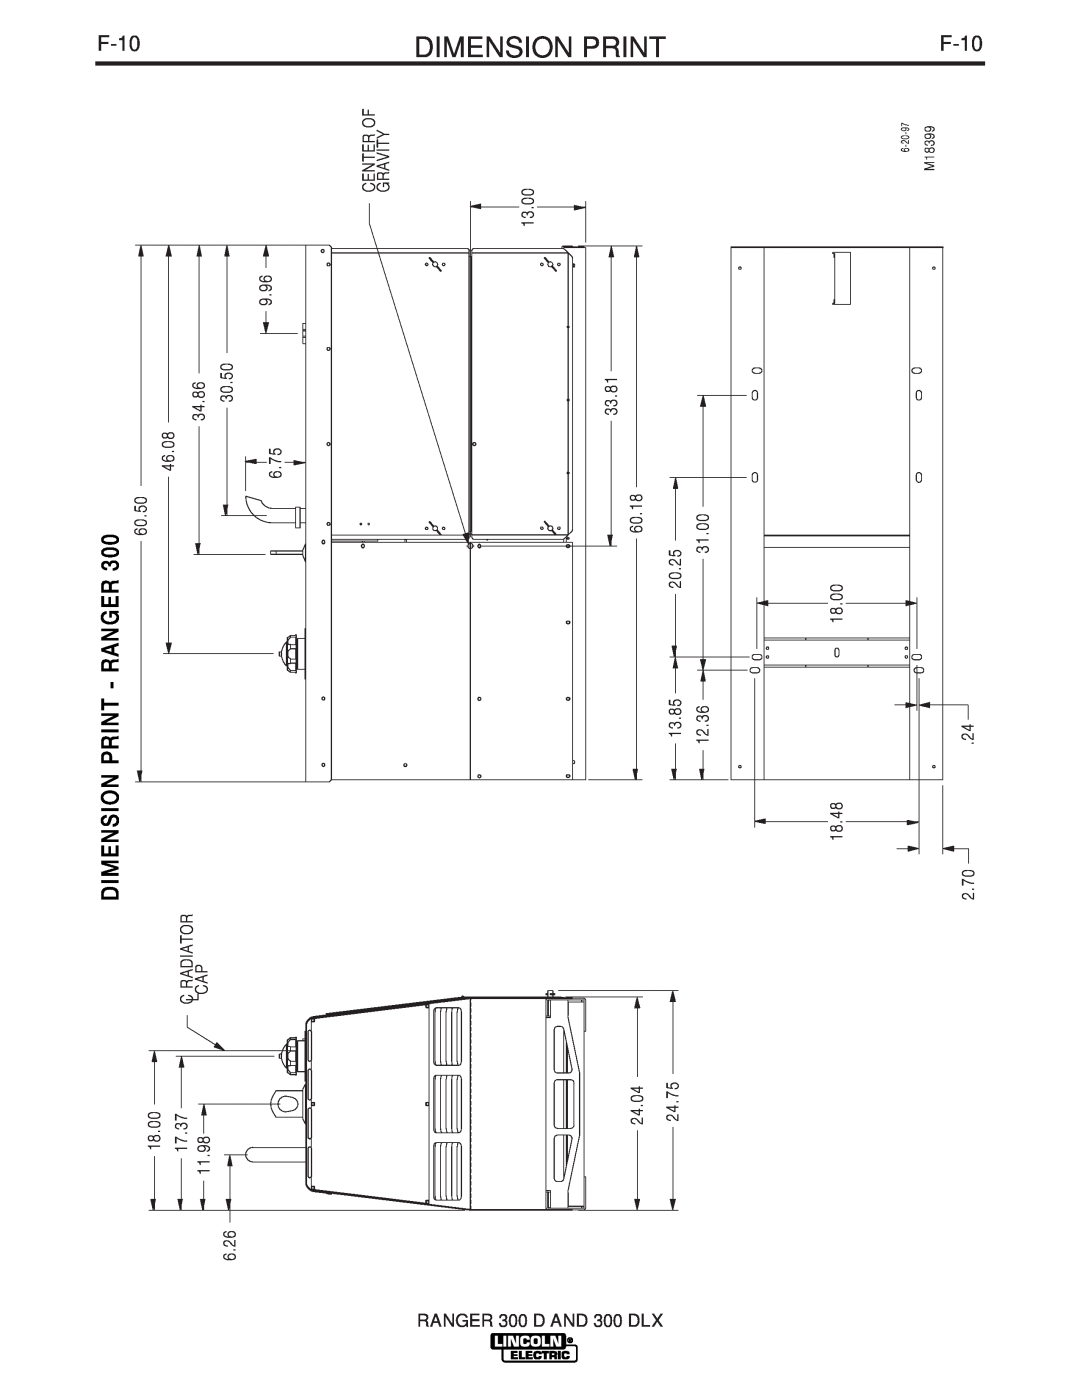 Lincoln Electric 300 DLX manual Dimension, Print, F-10 